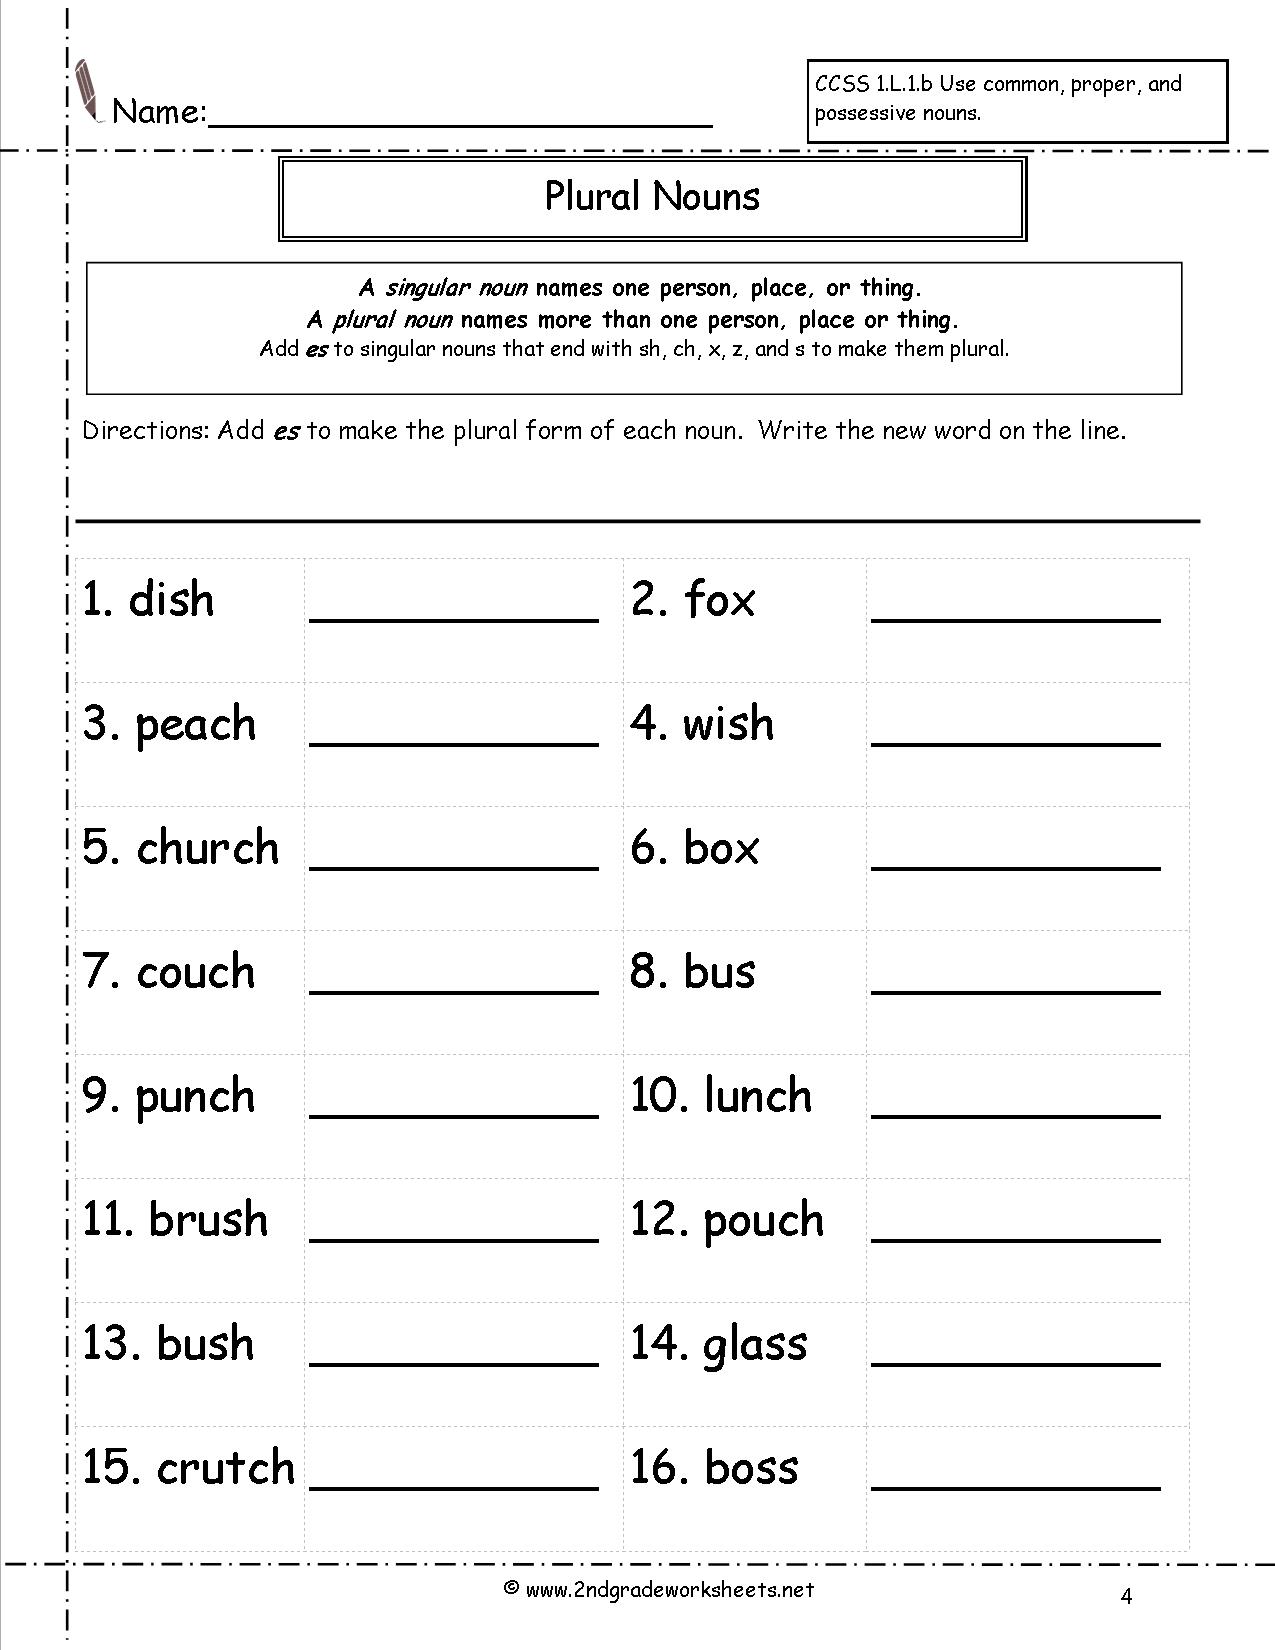 11-irregular-verbs-worksheet-3rd-grade-worksheeto